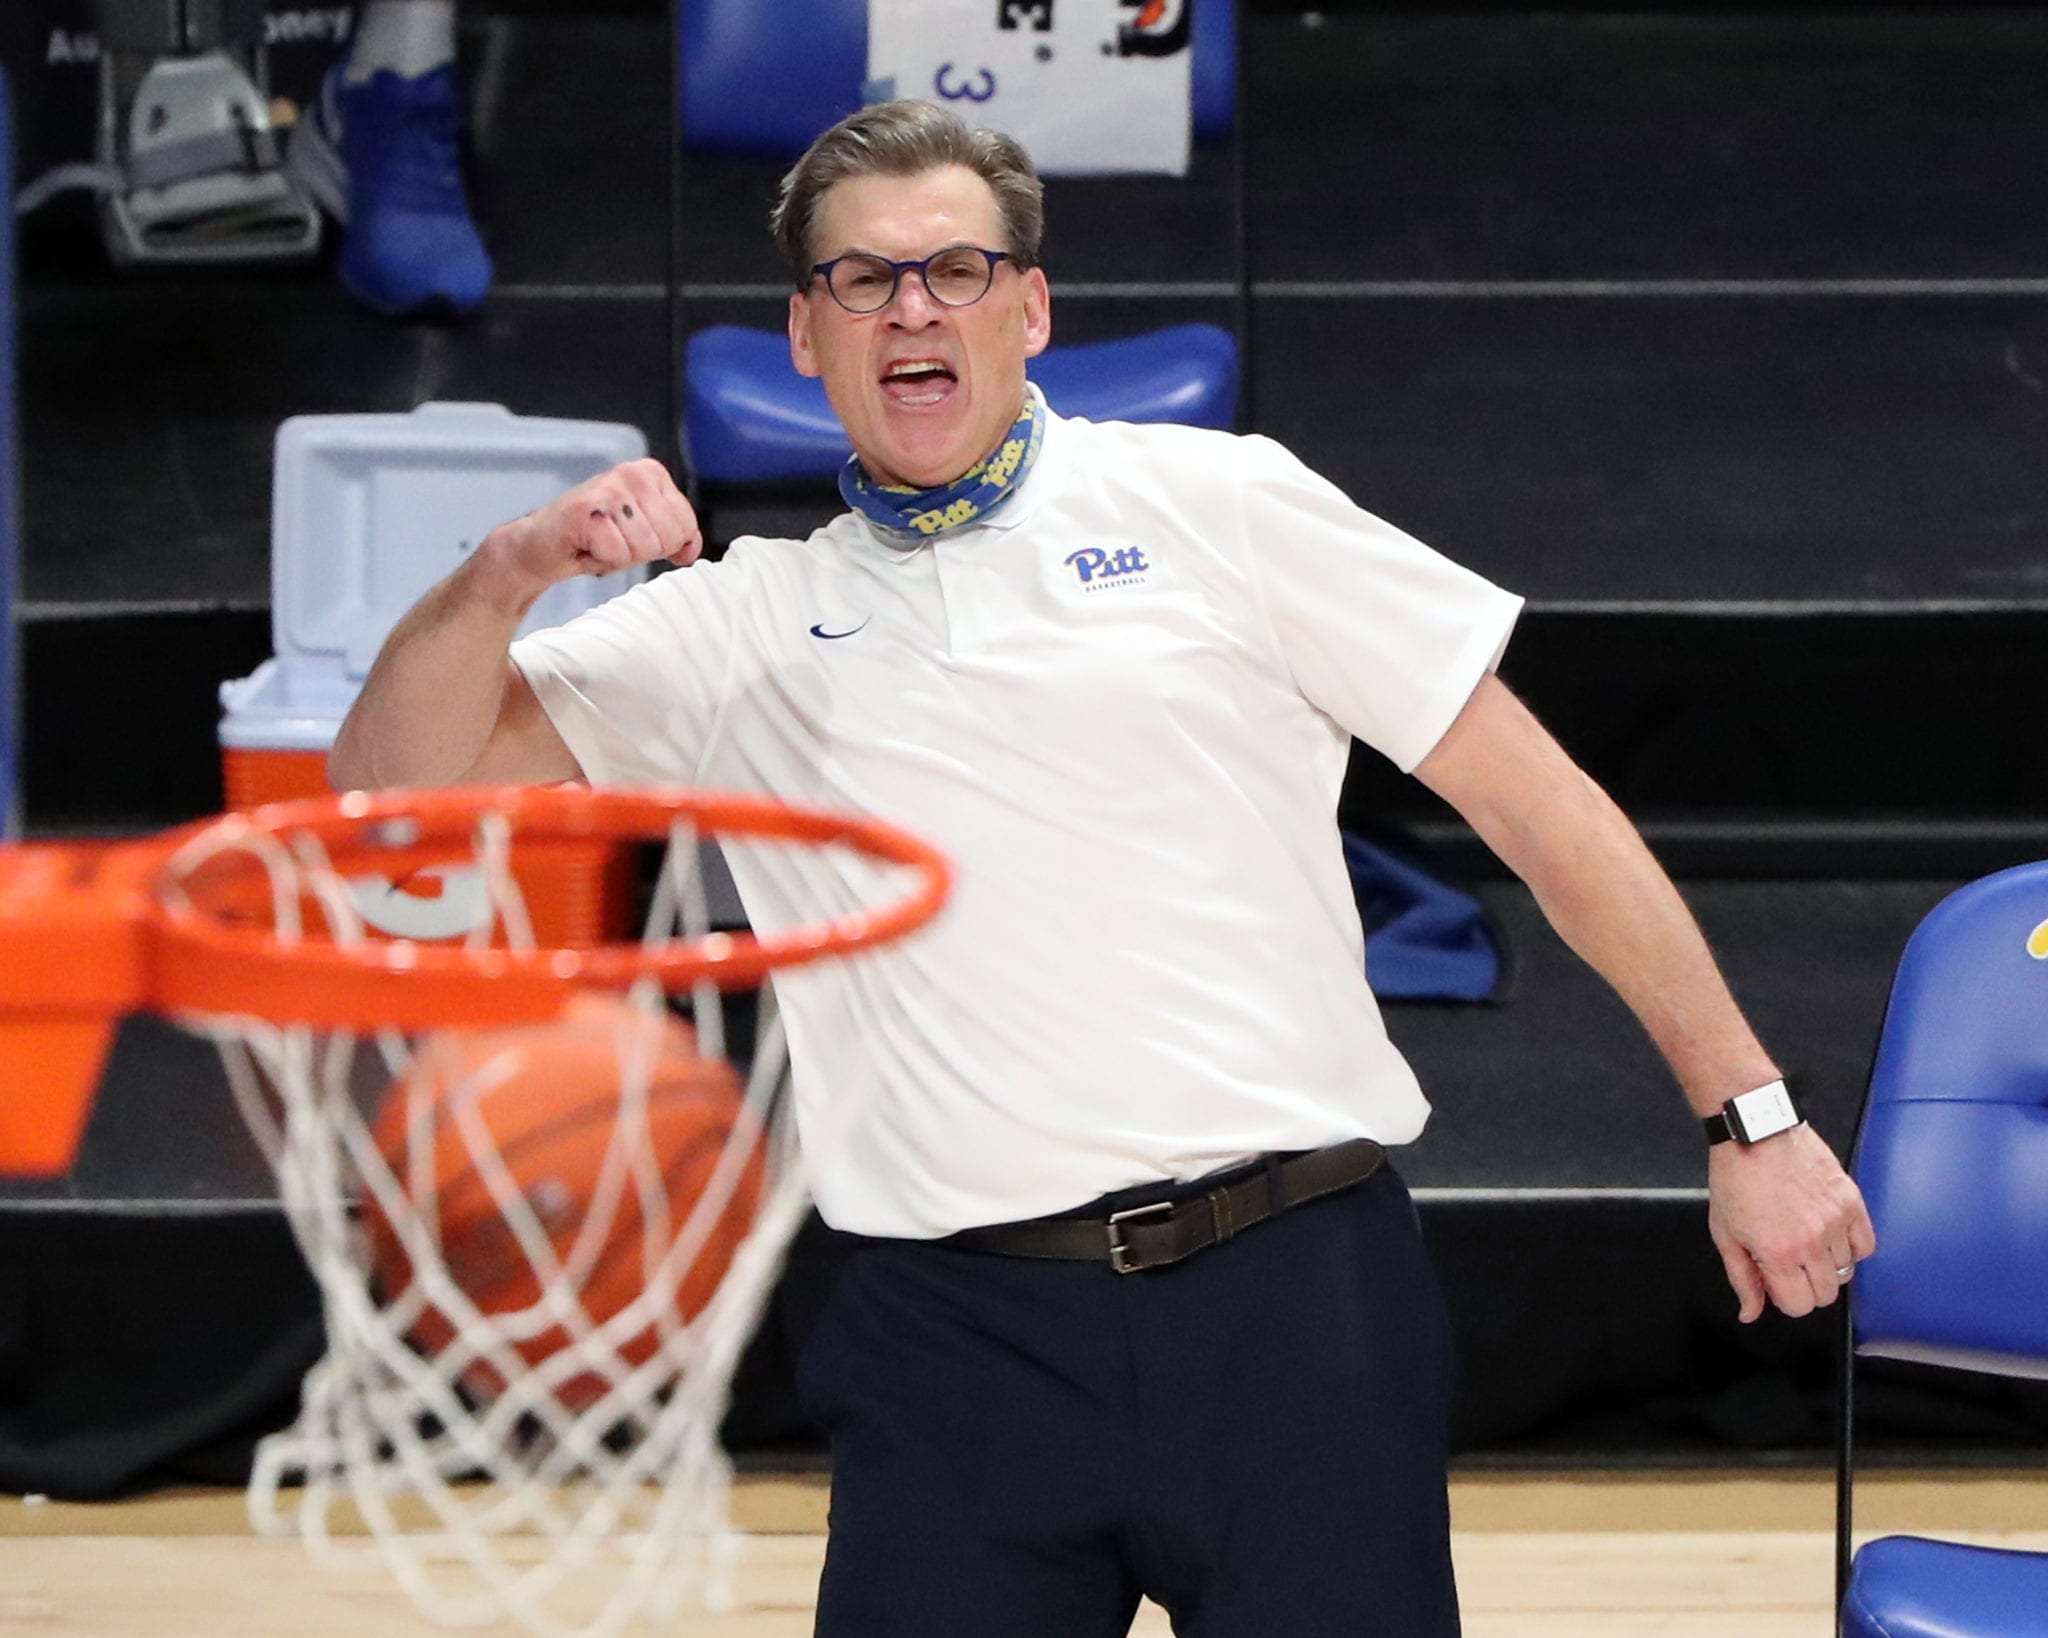 Pitt's Tim O'Toole basketball coach